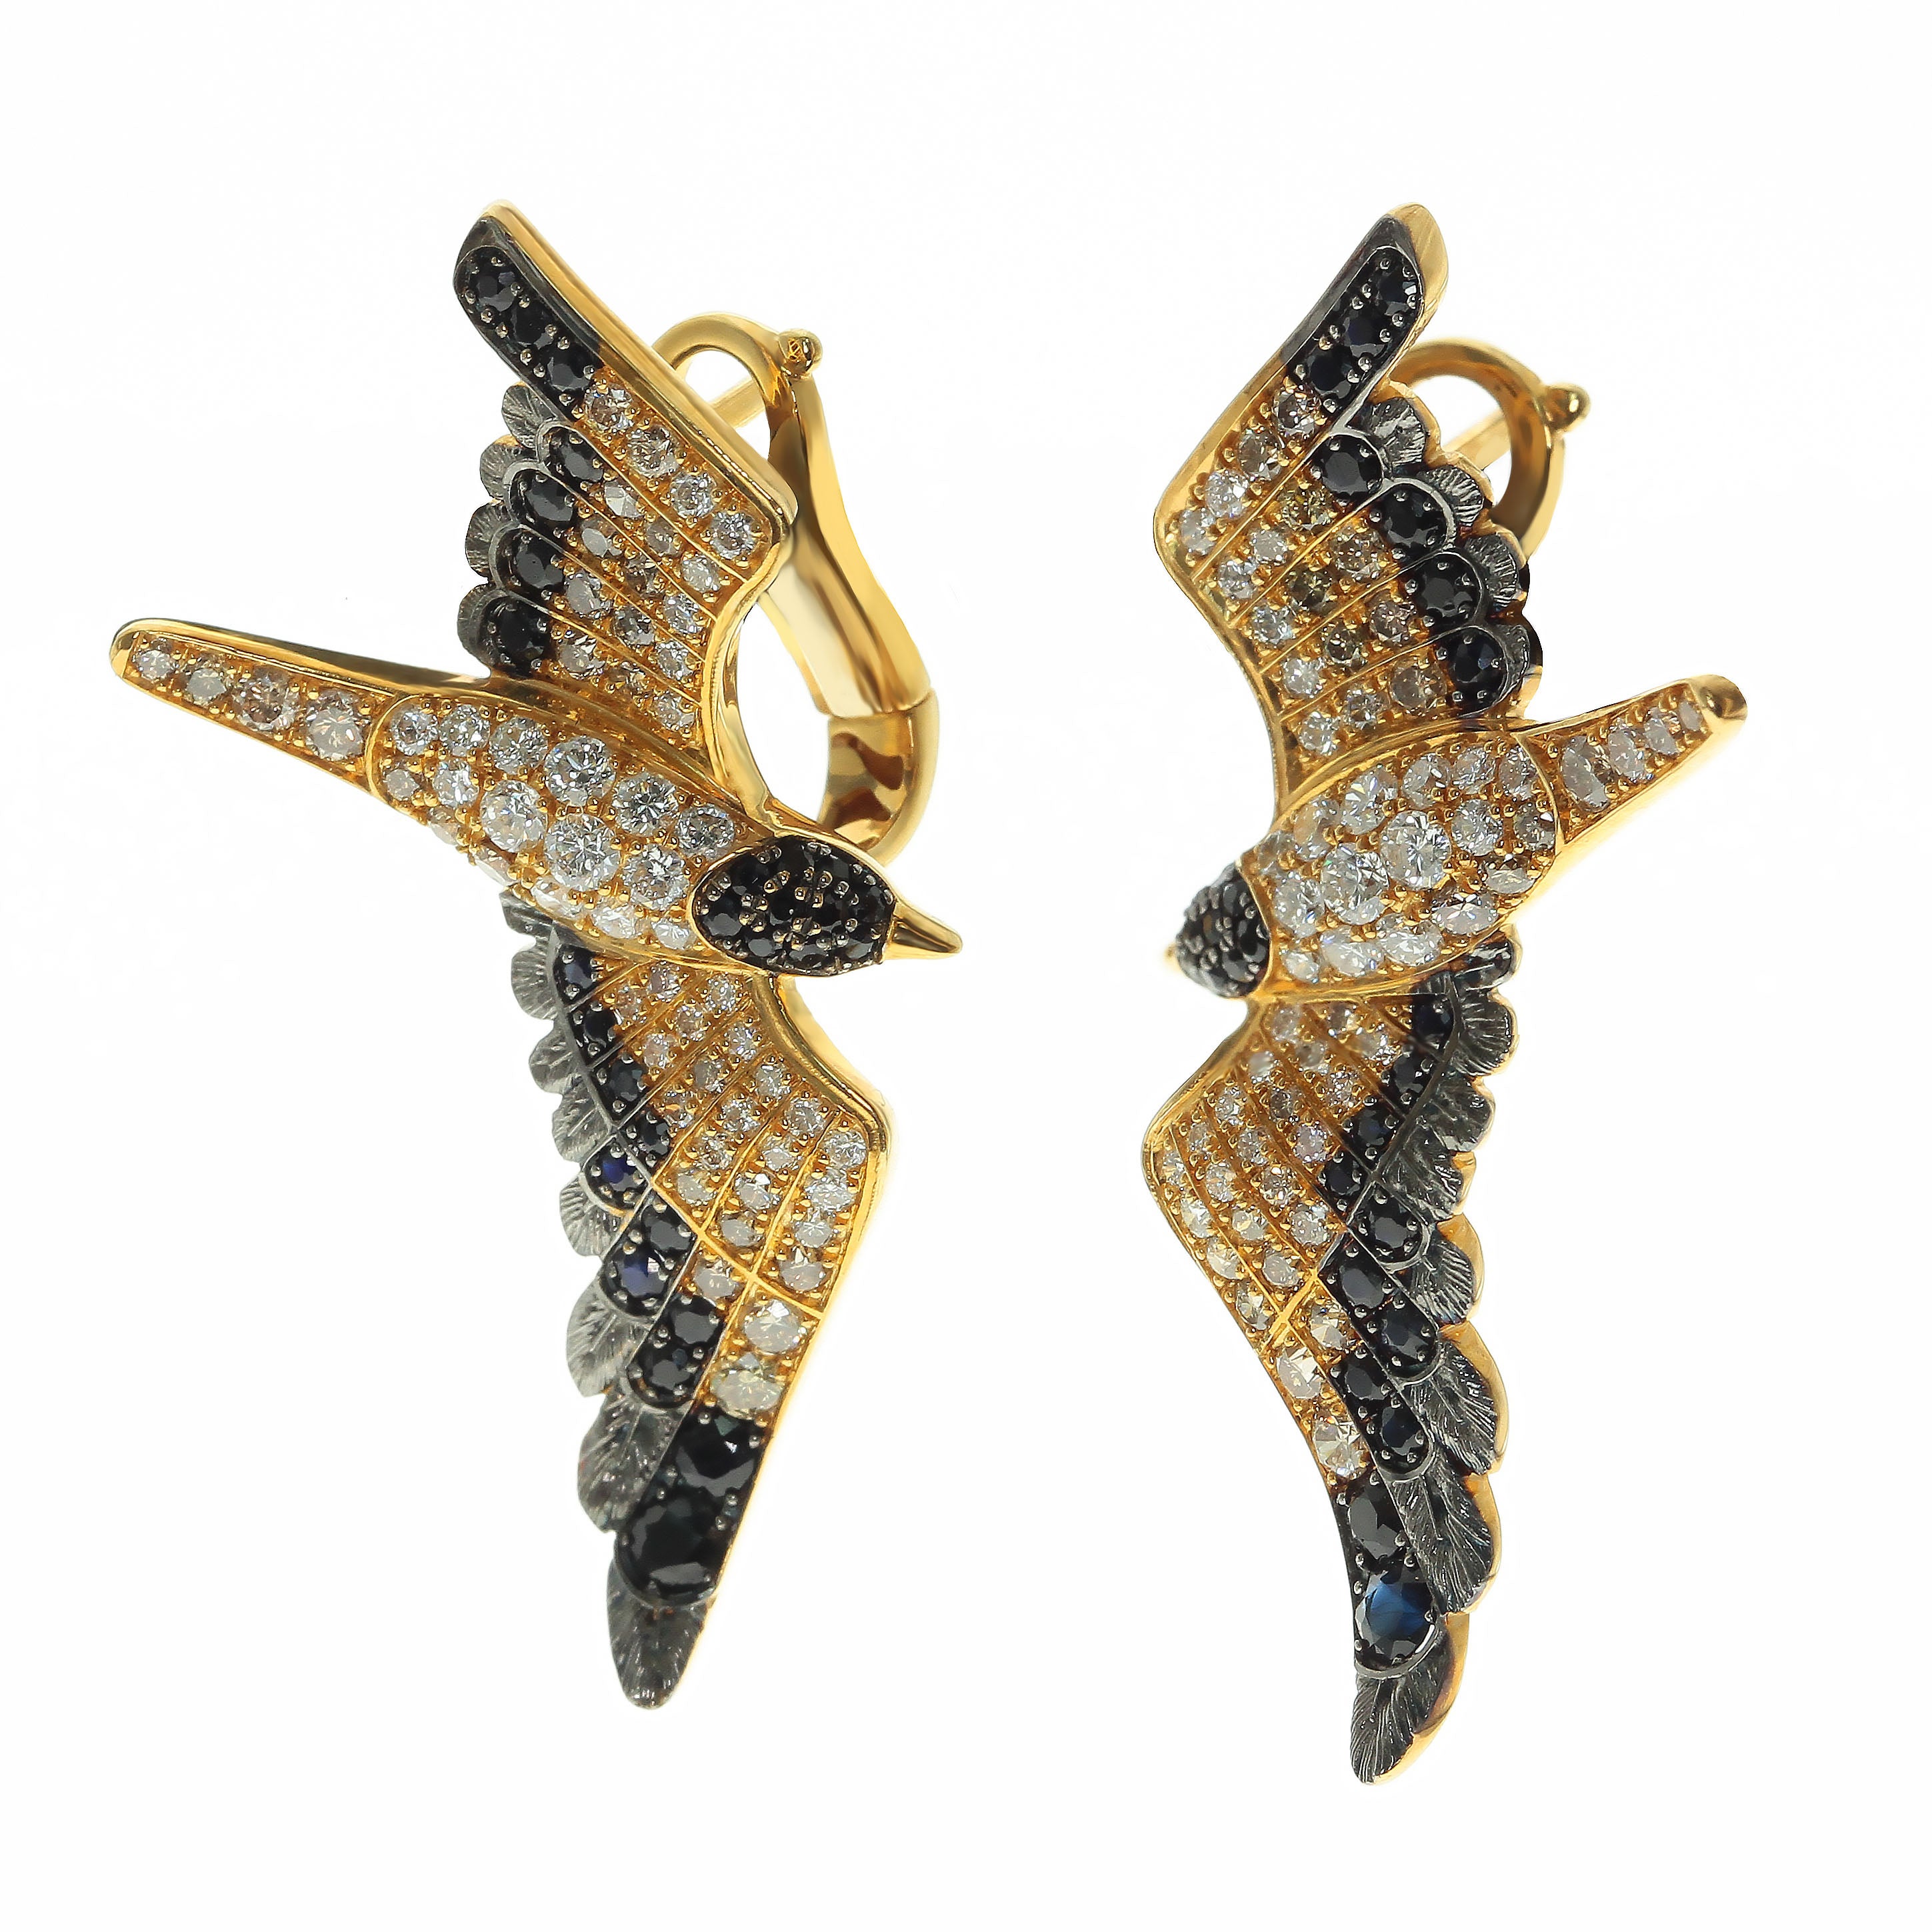 E 0294-0, 18K Yellow Gold, Champagne and Black Diamonds Earrings